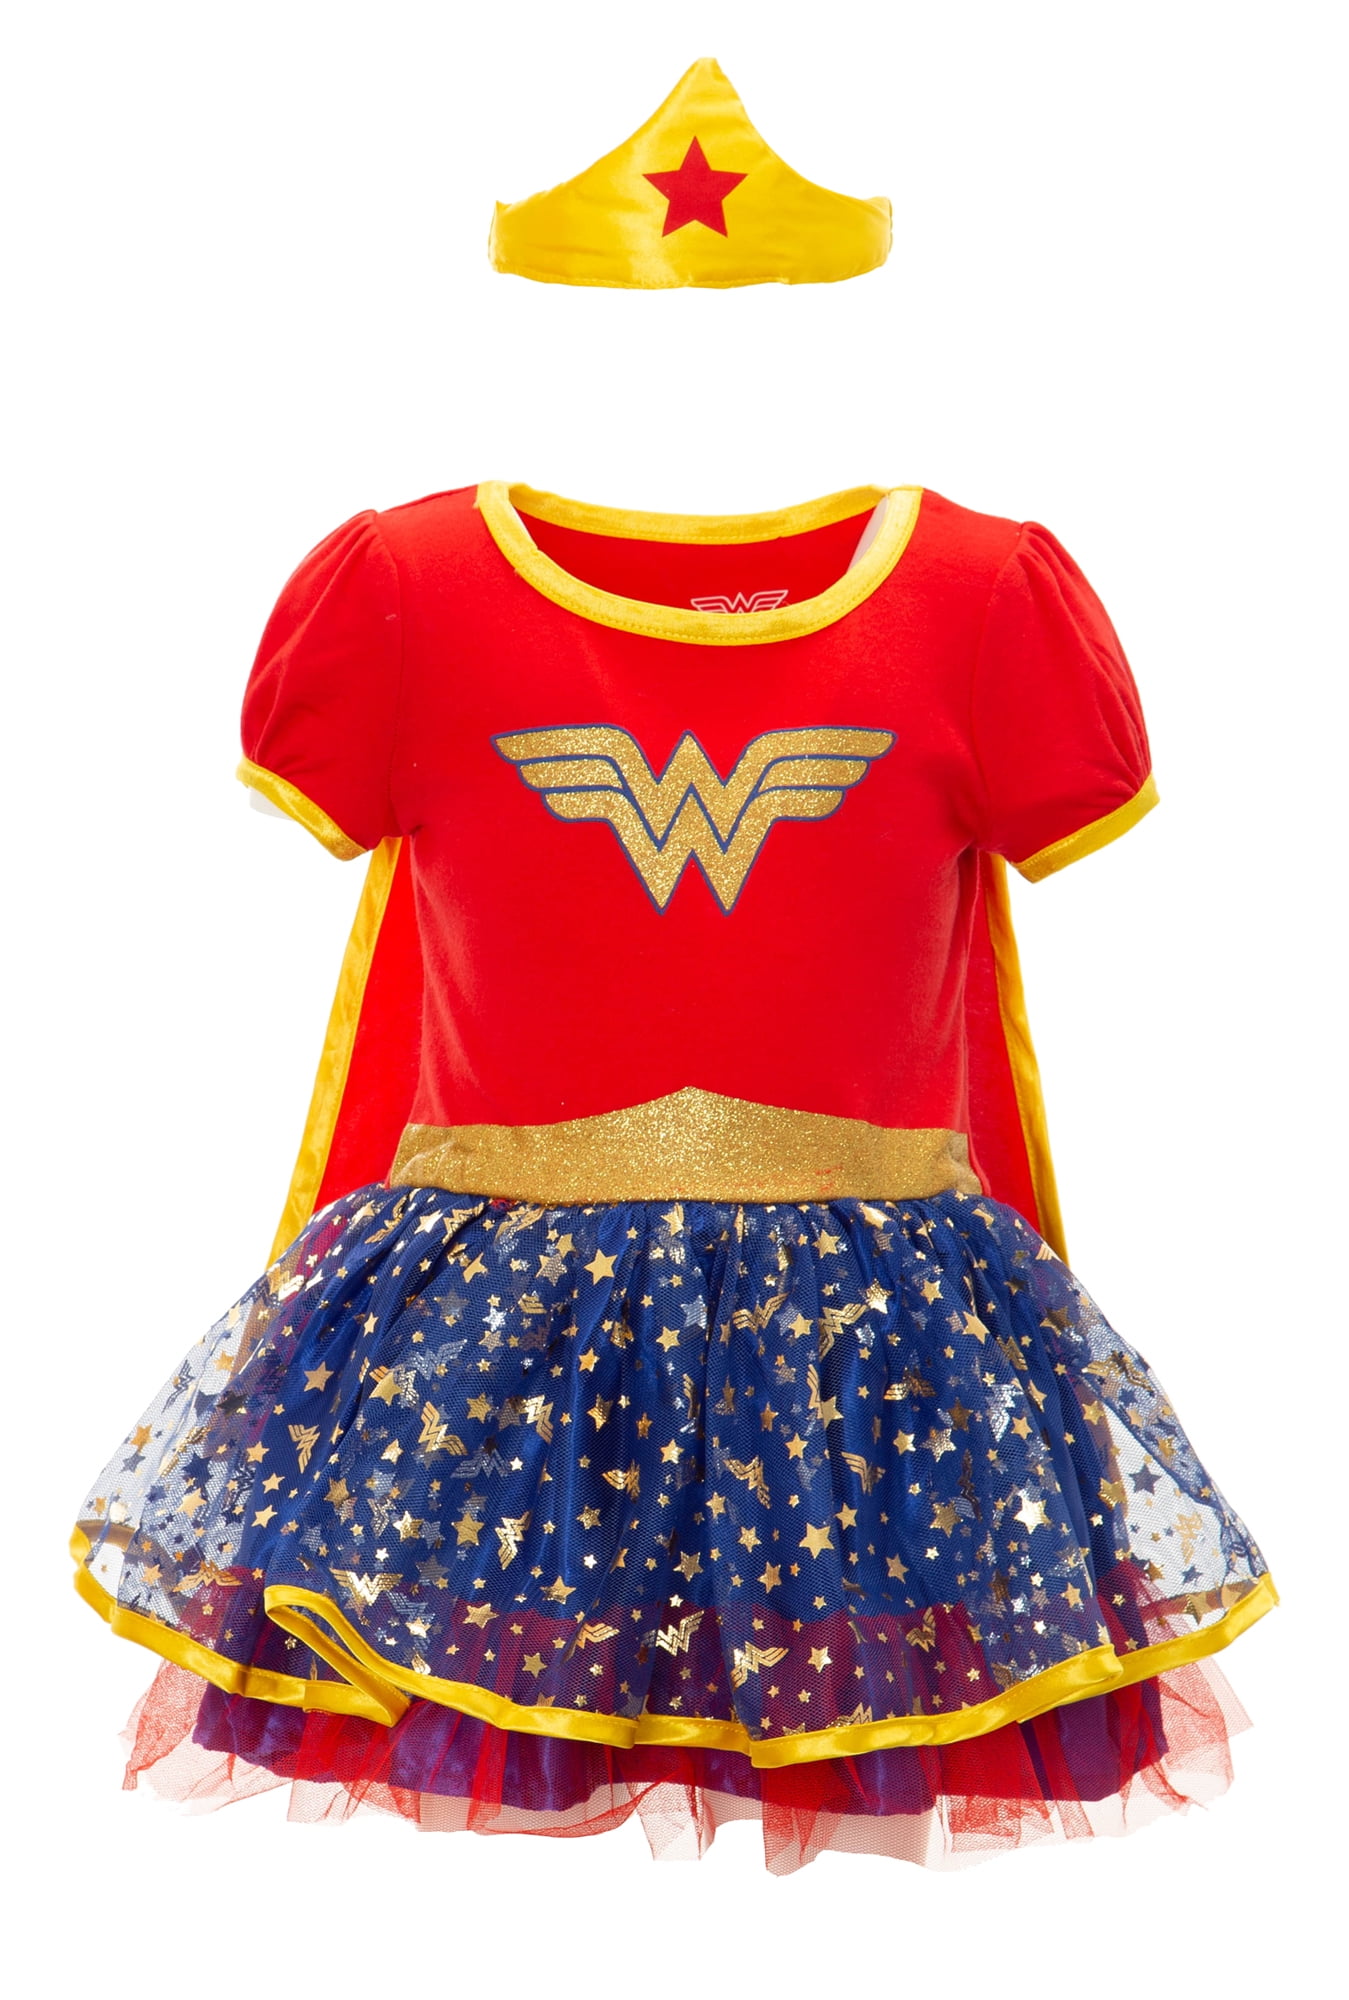 Kids Girls Wonder Women Dress Up Crown Arm Gauntlets Fancy Costume Accessories